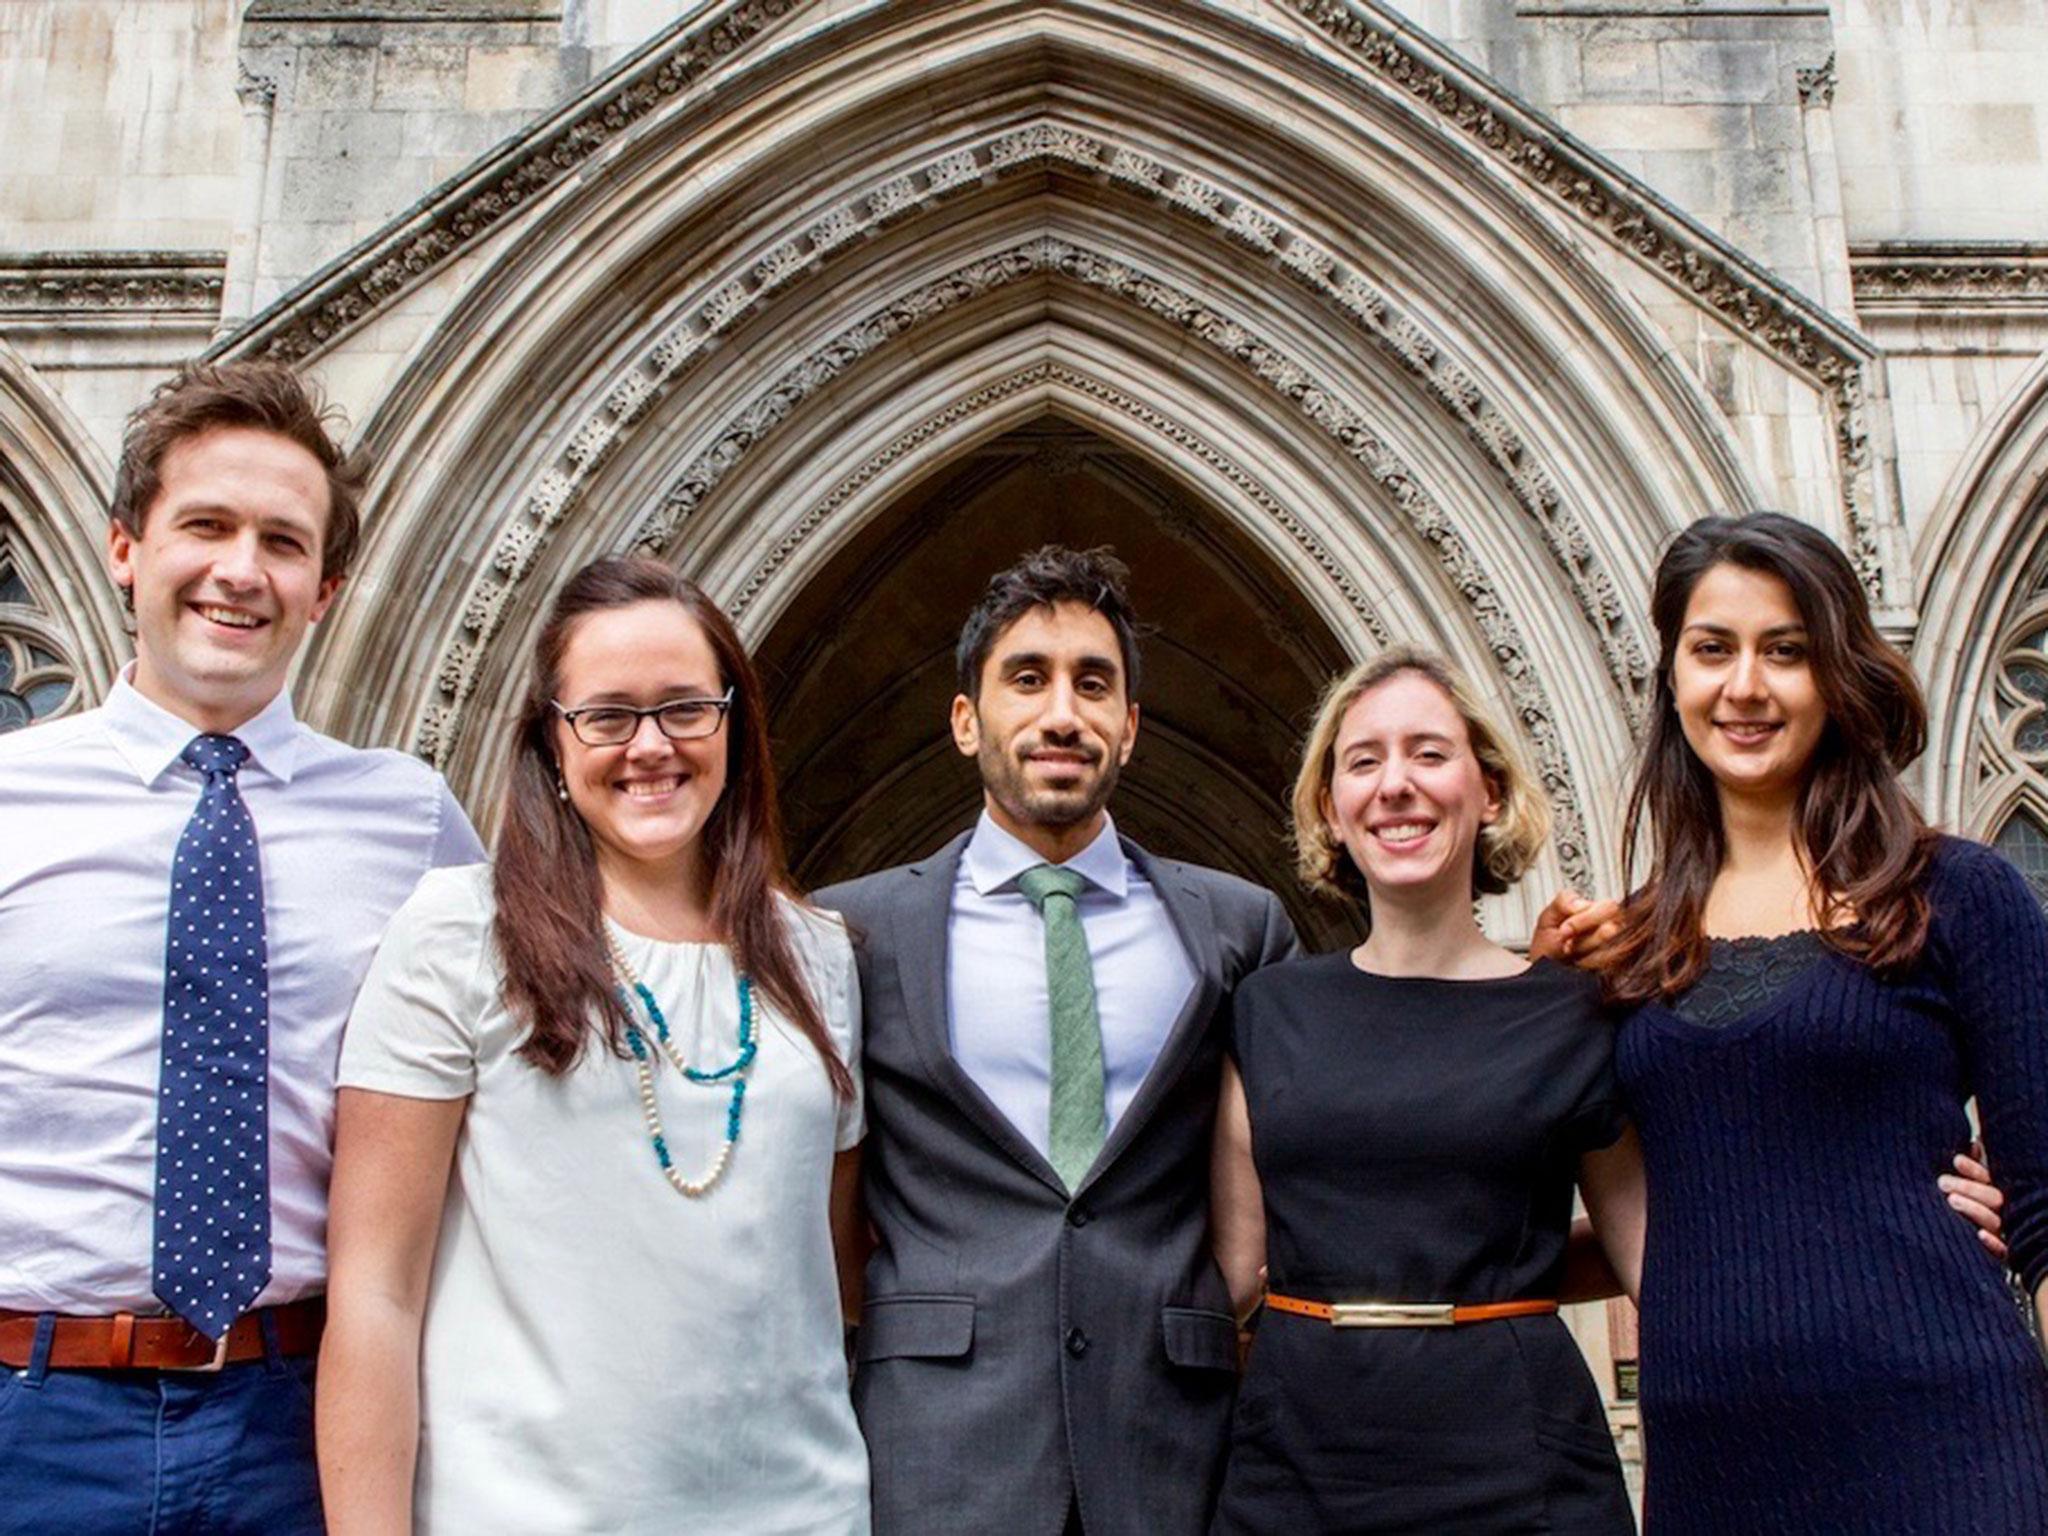 Outside the Royal Courts of Justice (from left to right): Dr Ben White, Dr Marie-Estella McVeigh, Dr Amar Mashru, Dr Francesca Silman, Dr Nadia Masood